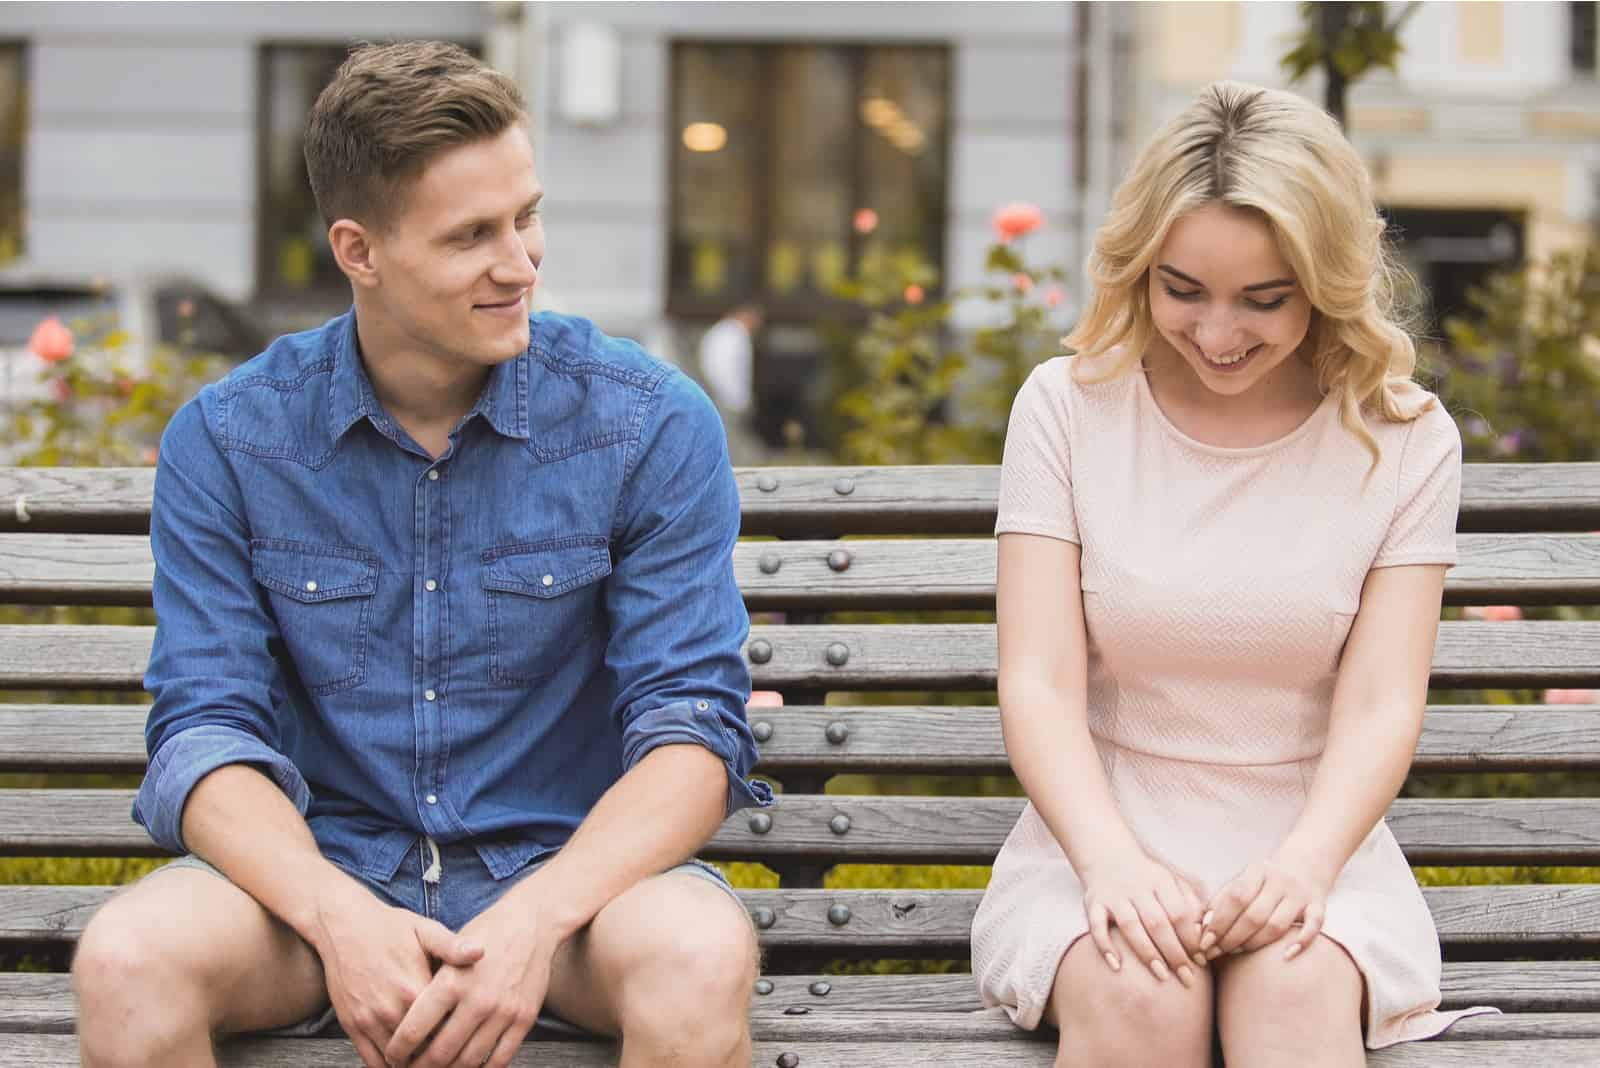 una coppia di innamorati seduti su una panchina a parlare